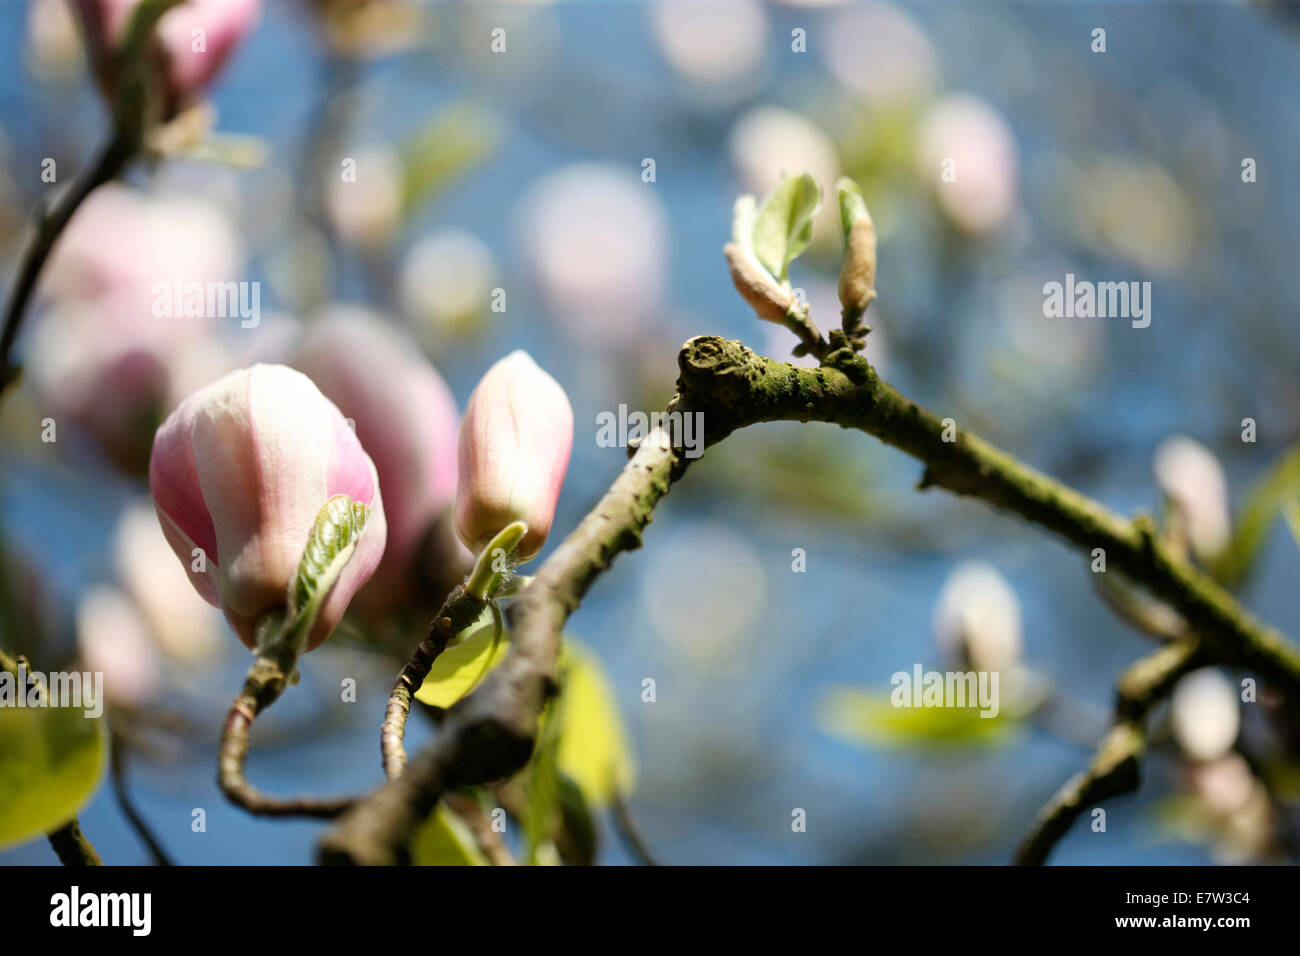 weiße Soulangeana Magnolienbaum in Knospe - Vitalität © Jane Ann Butler Fotografie JABP1283 Stockfoto